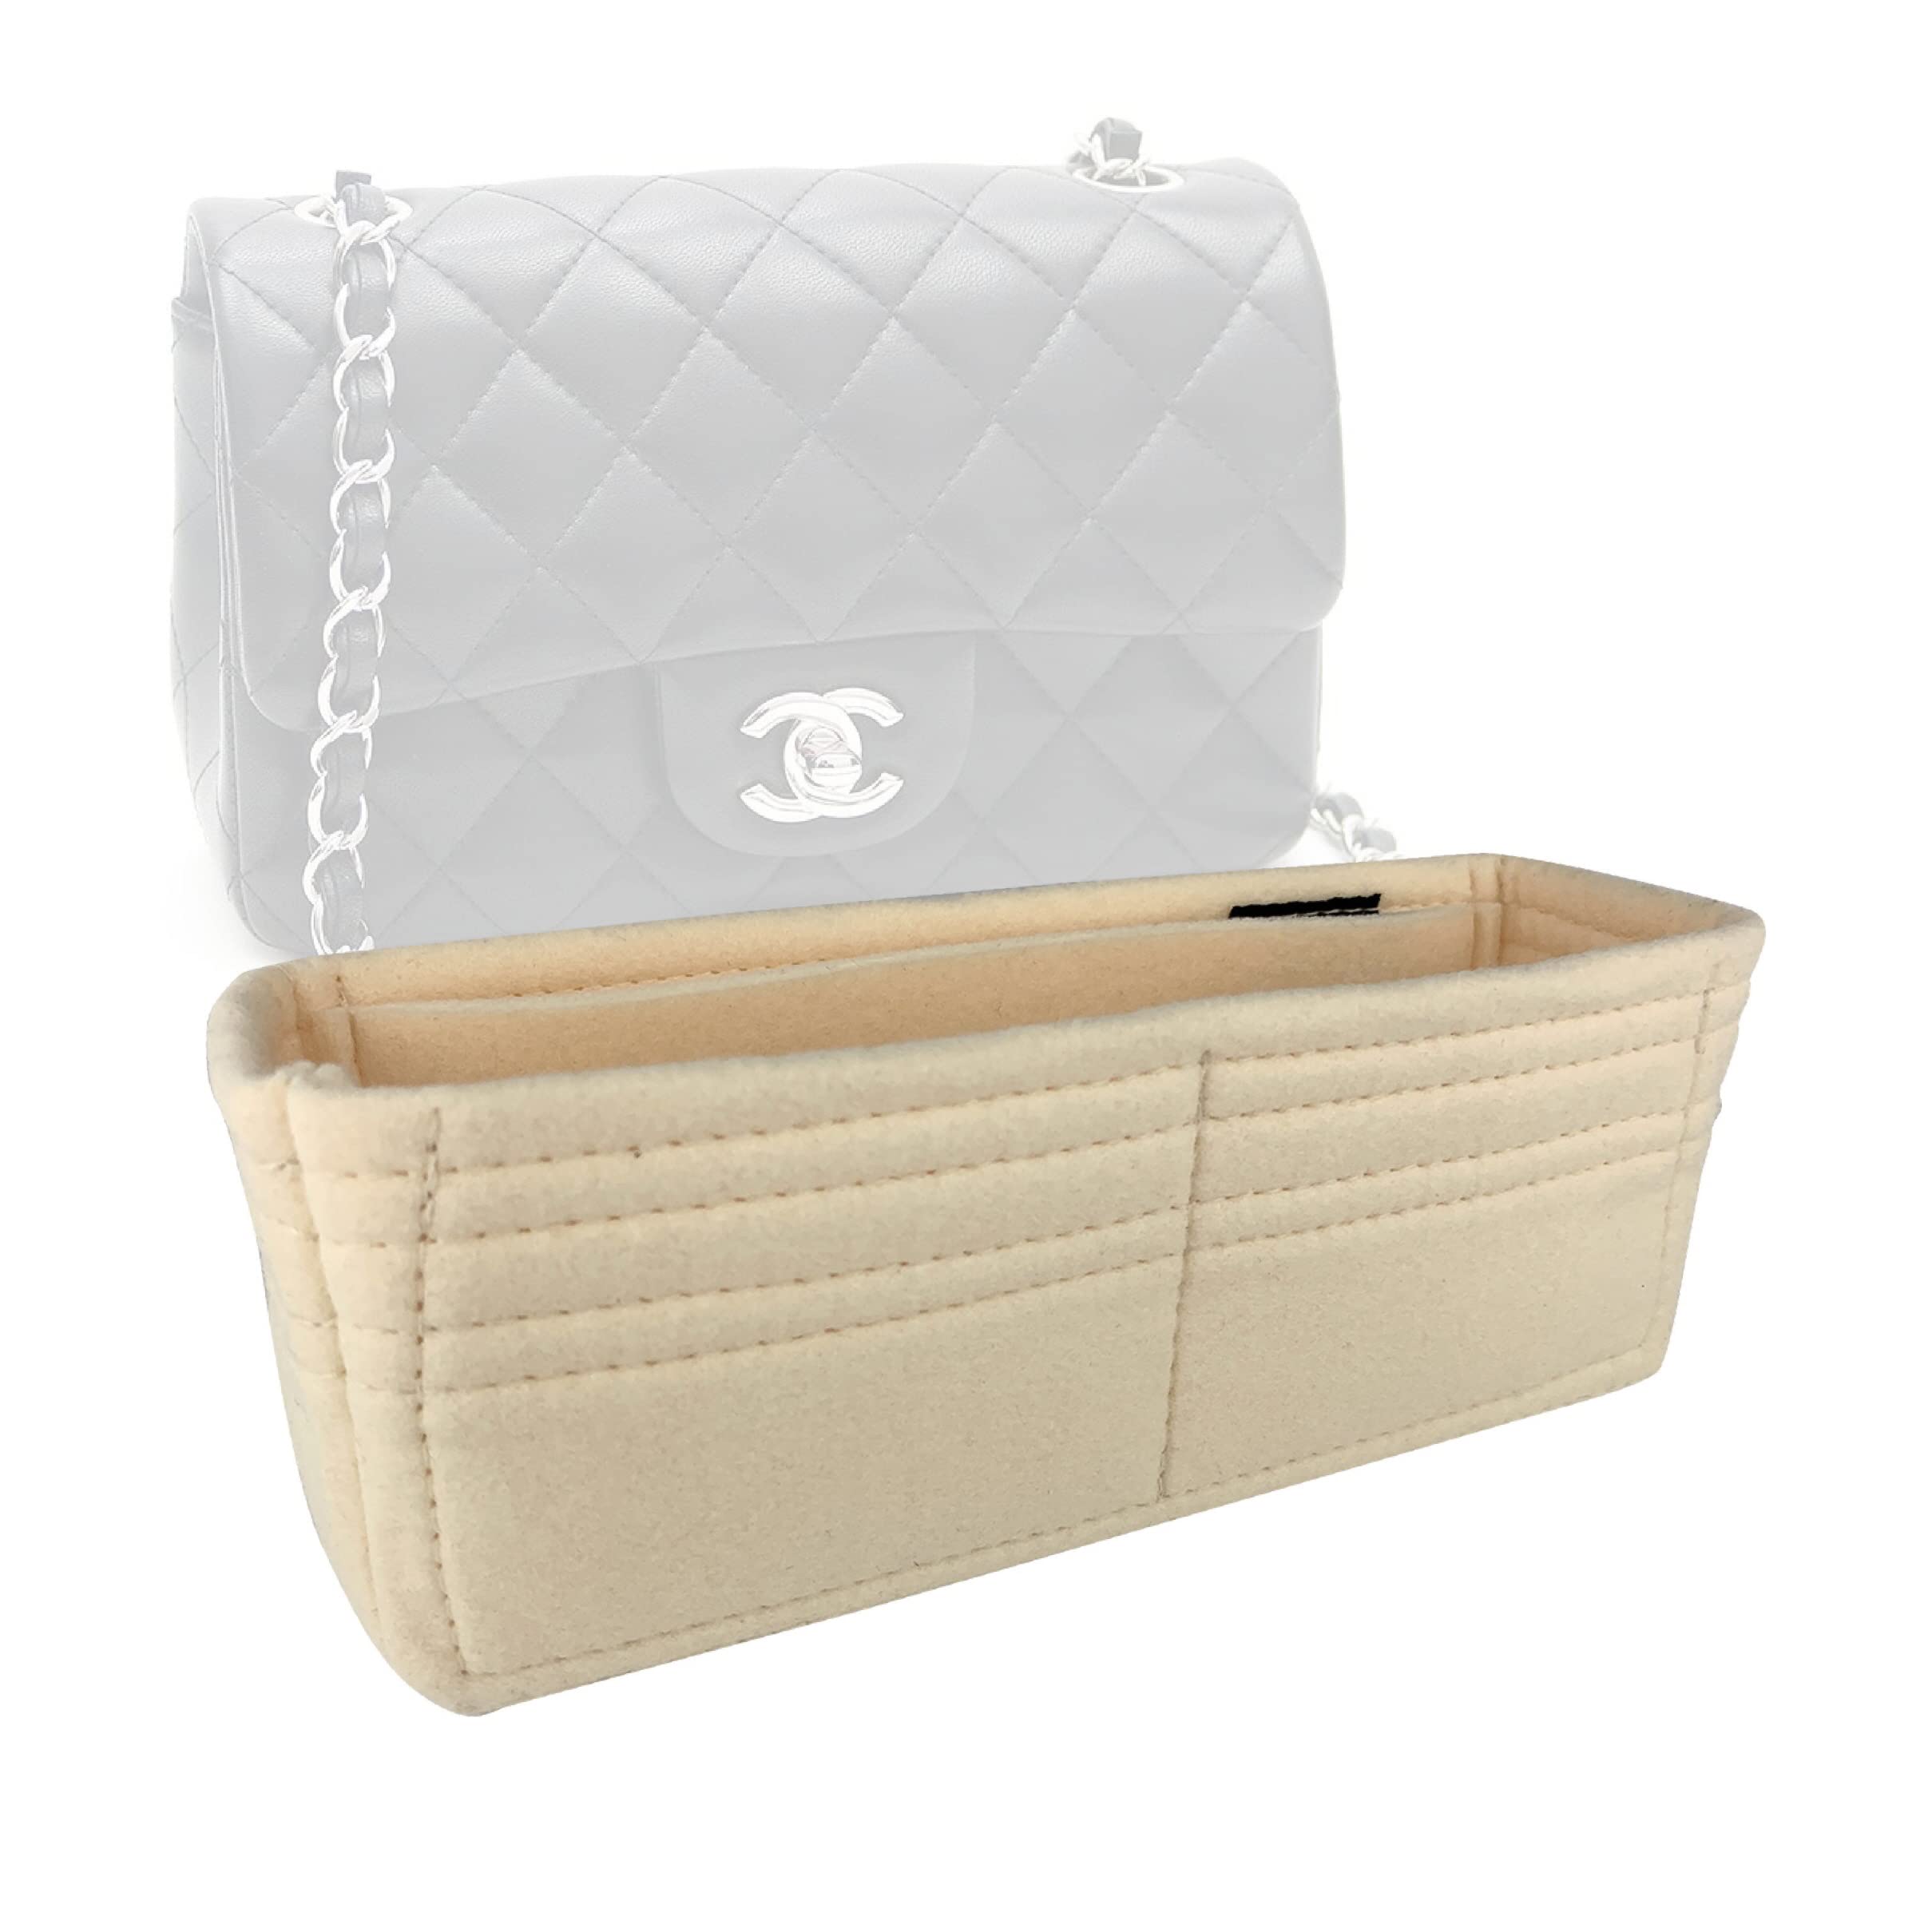 Zoomoni Premium Purse Organizer Insert For Chanel Classic Flap Mini Square, New Mini, Small, Medium, Jumbo, Maxi, with Top Handle (Handmade/20 Color Options) [Bag Organiser, Liner, Insert, Shaper]